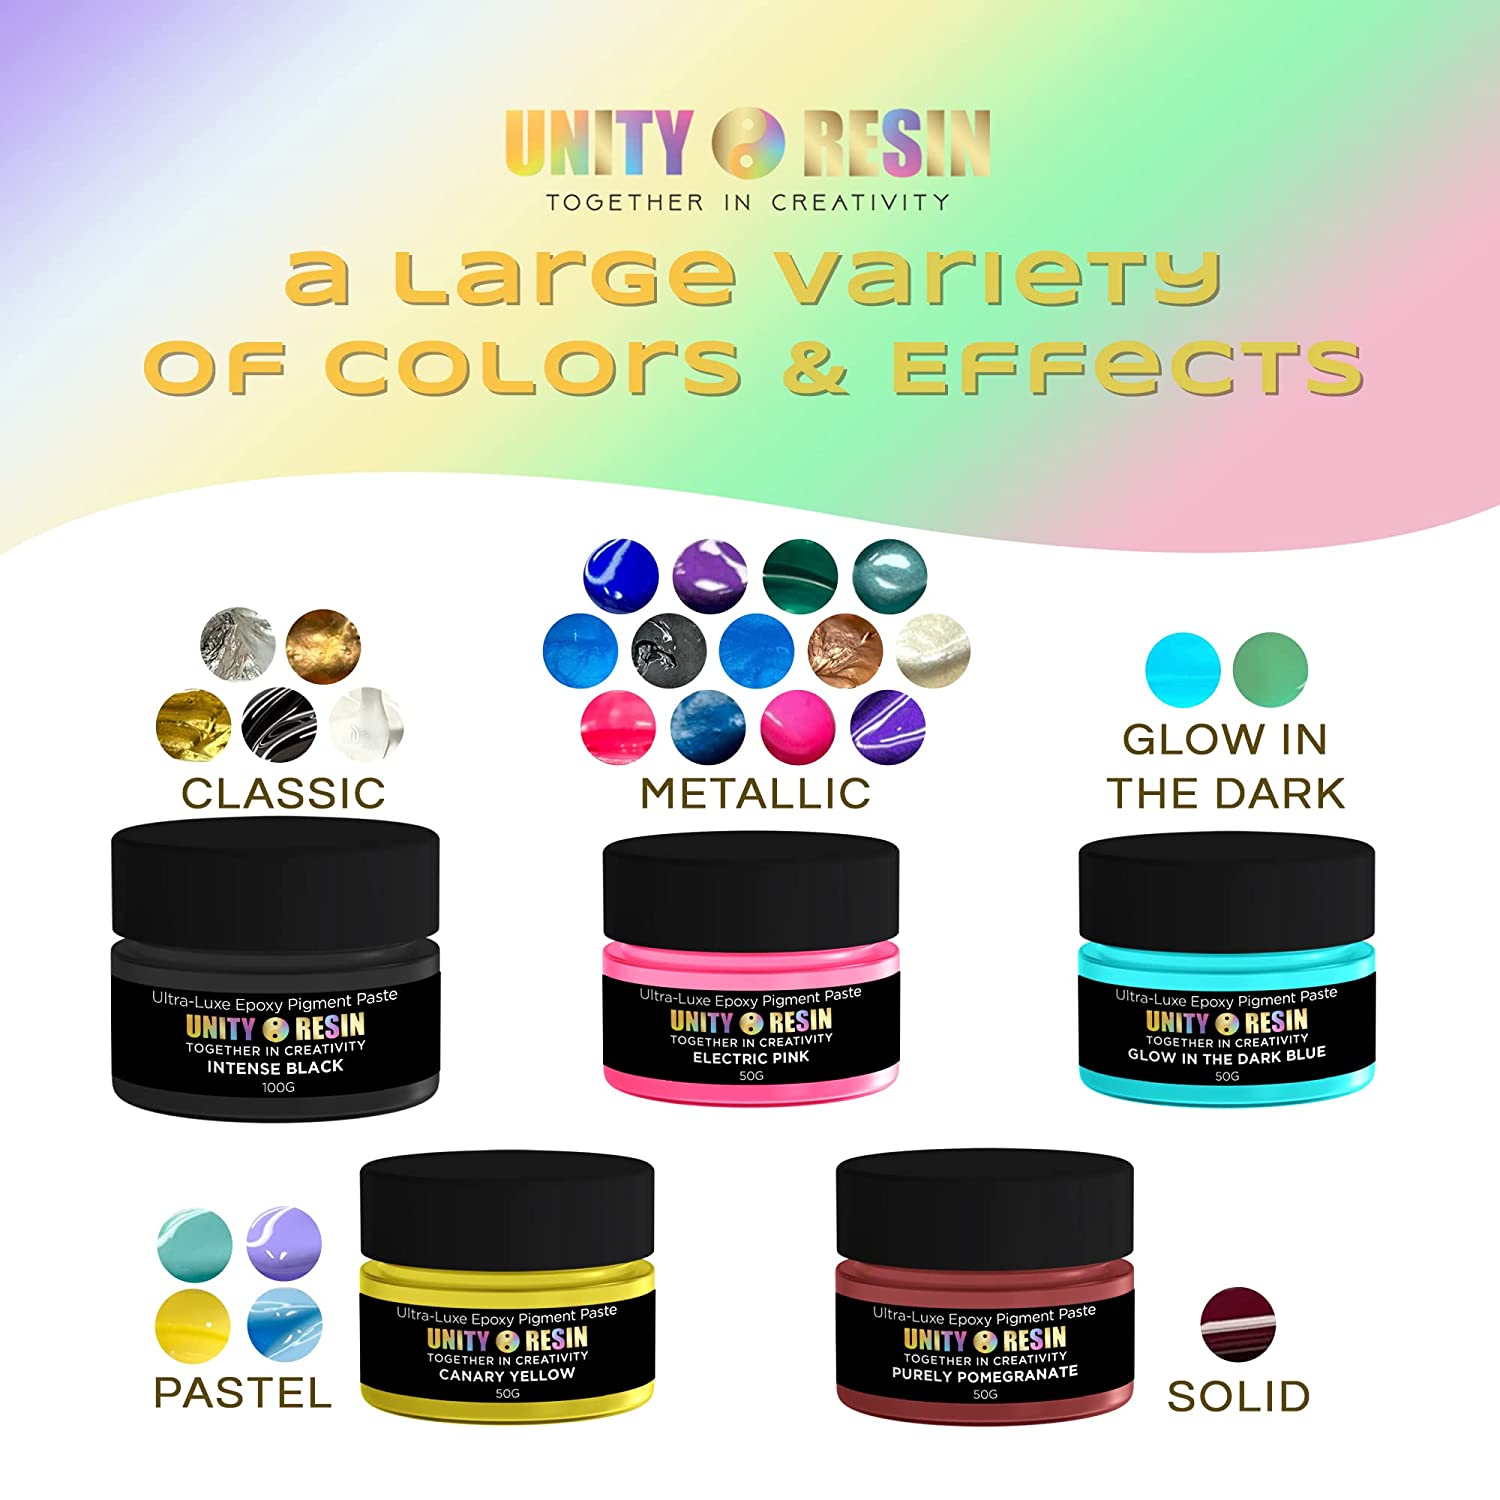 Ultra-Luxe Epoxy Resin Pigment Paste-OPULENT ORANGE (50G).